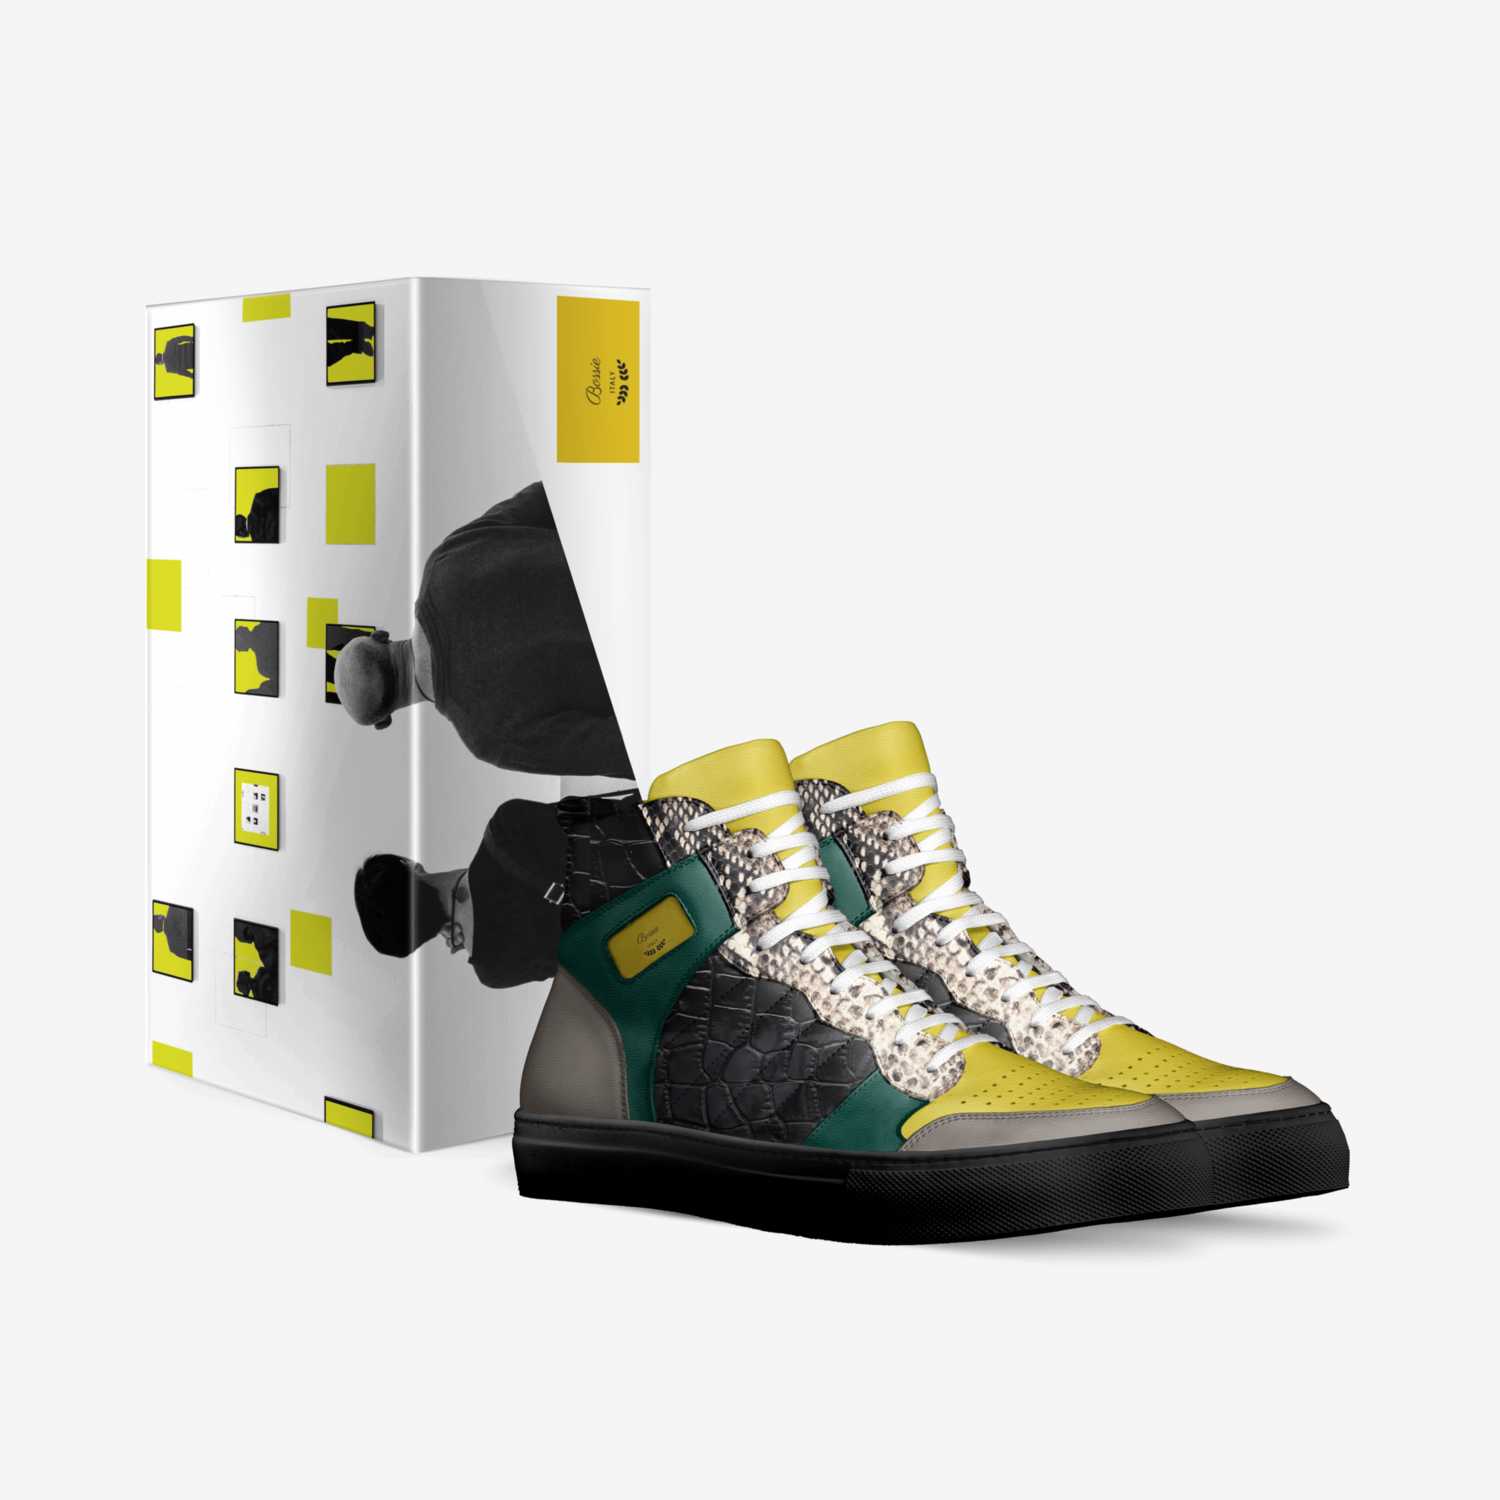 Bossie custom made in Italy shoes by Shakiya Gadson | Box view